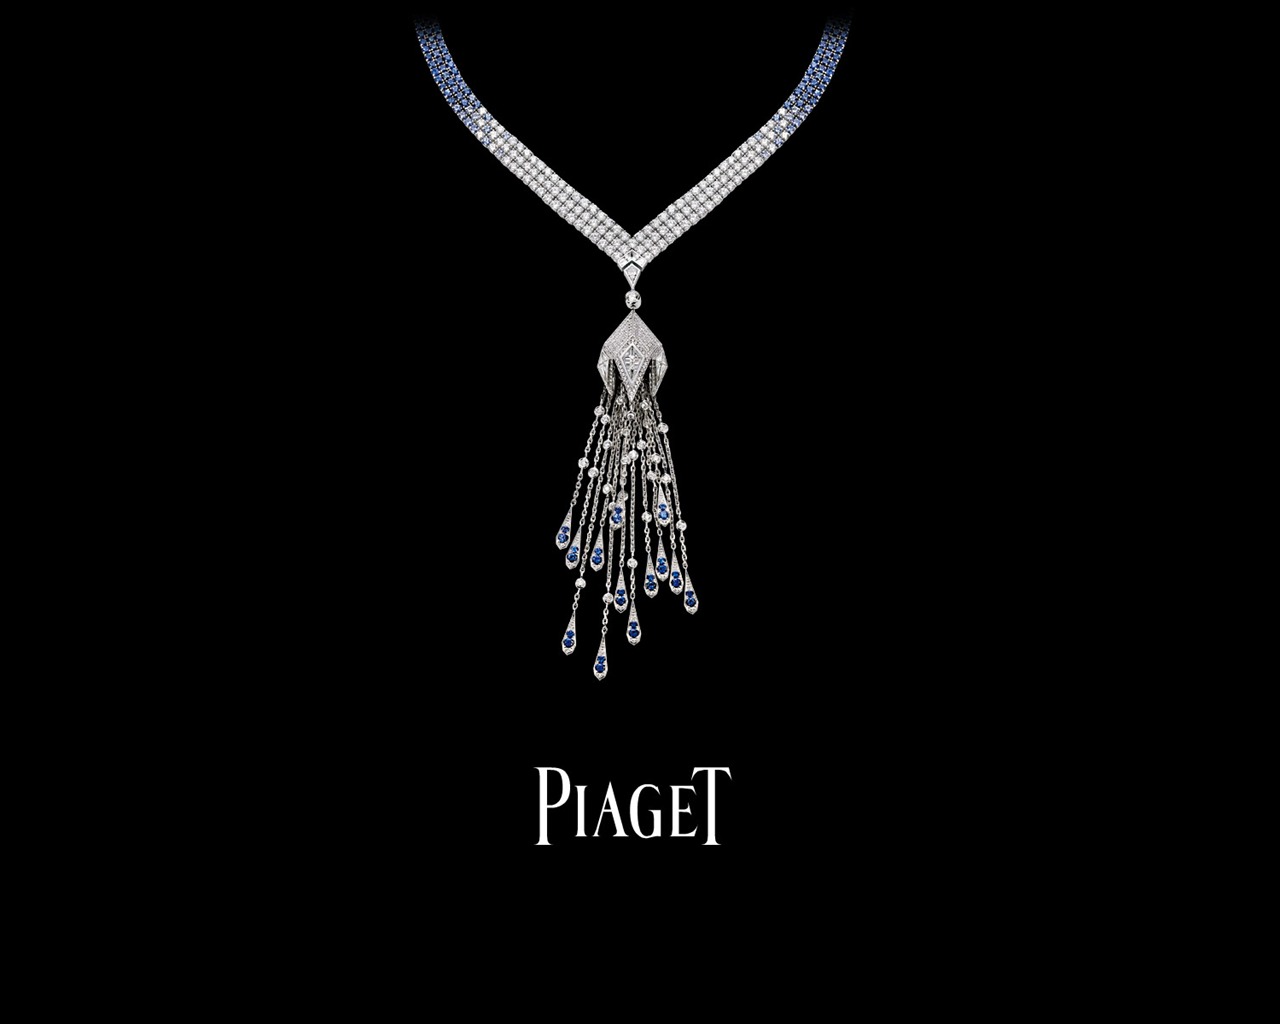 Piaget diamond jewelry wallpaper (4) #3 - 1280x1024